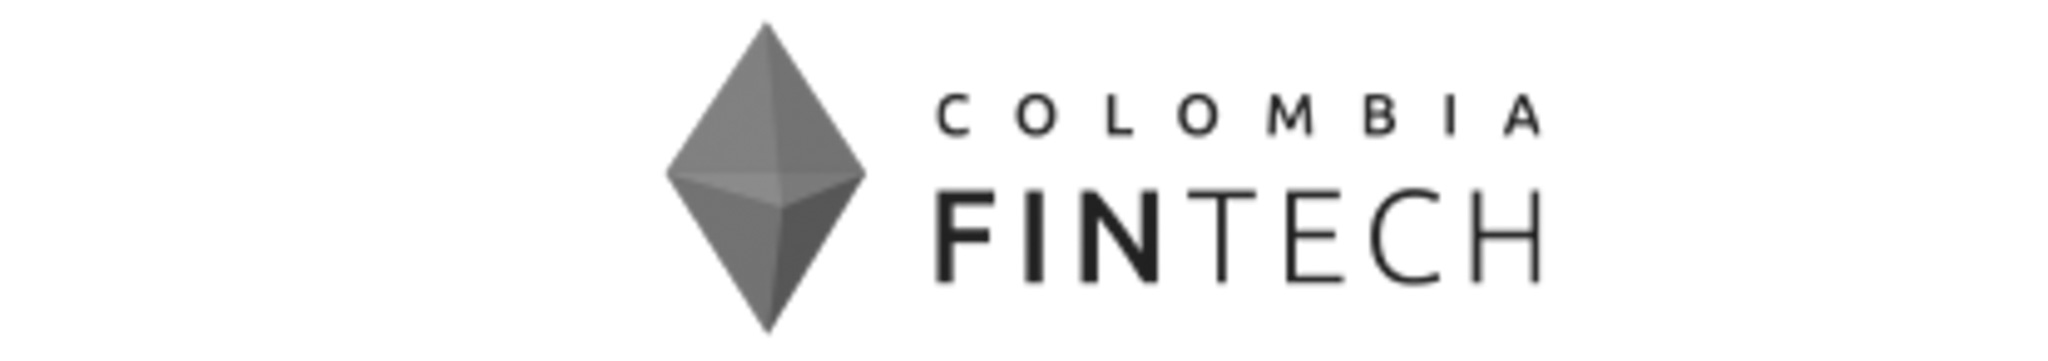 Colombia Fintech aliado Liquitech